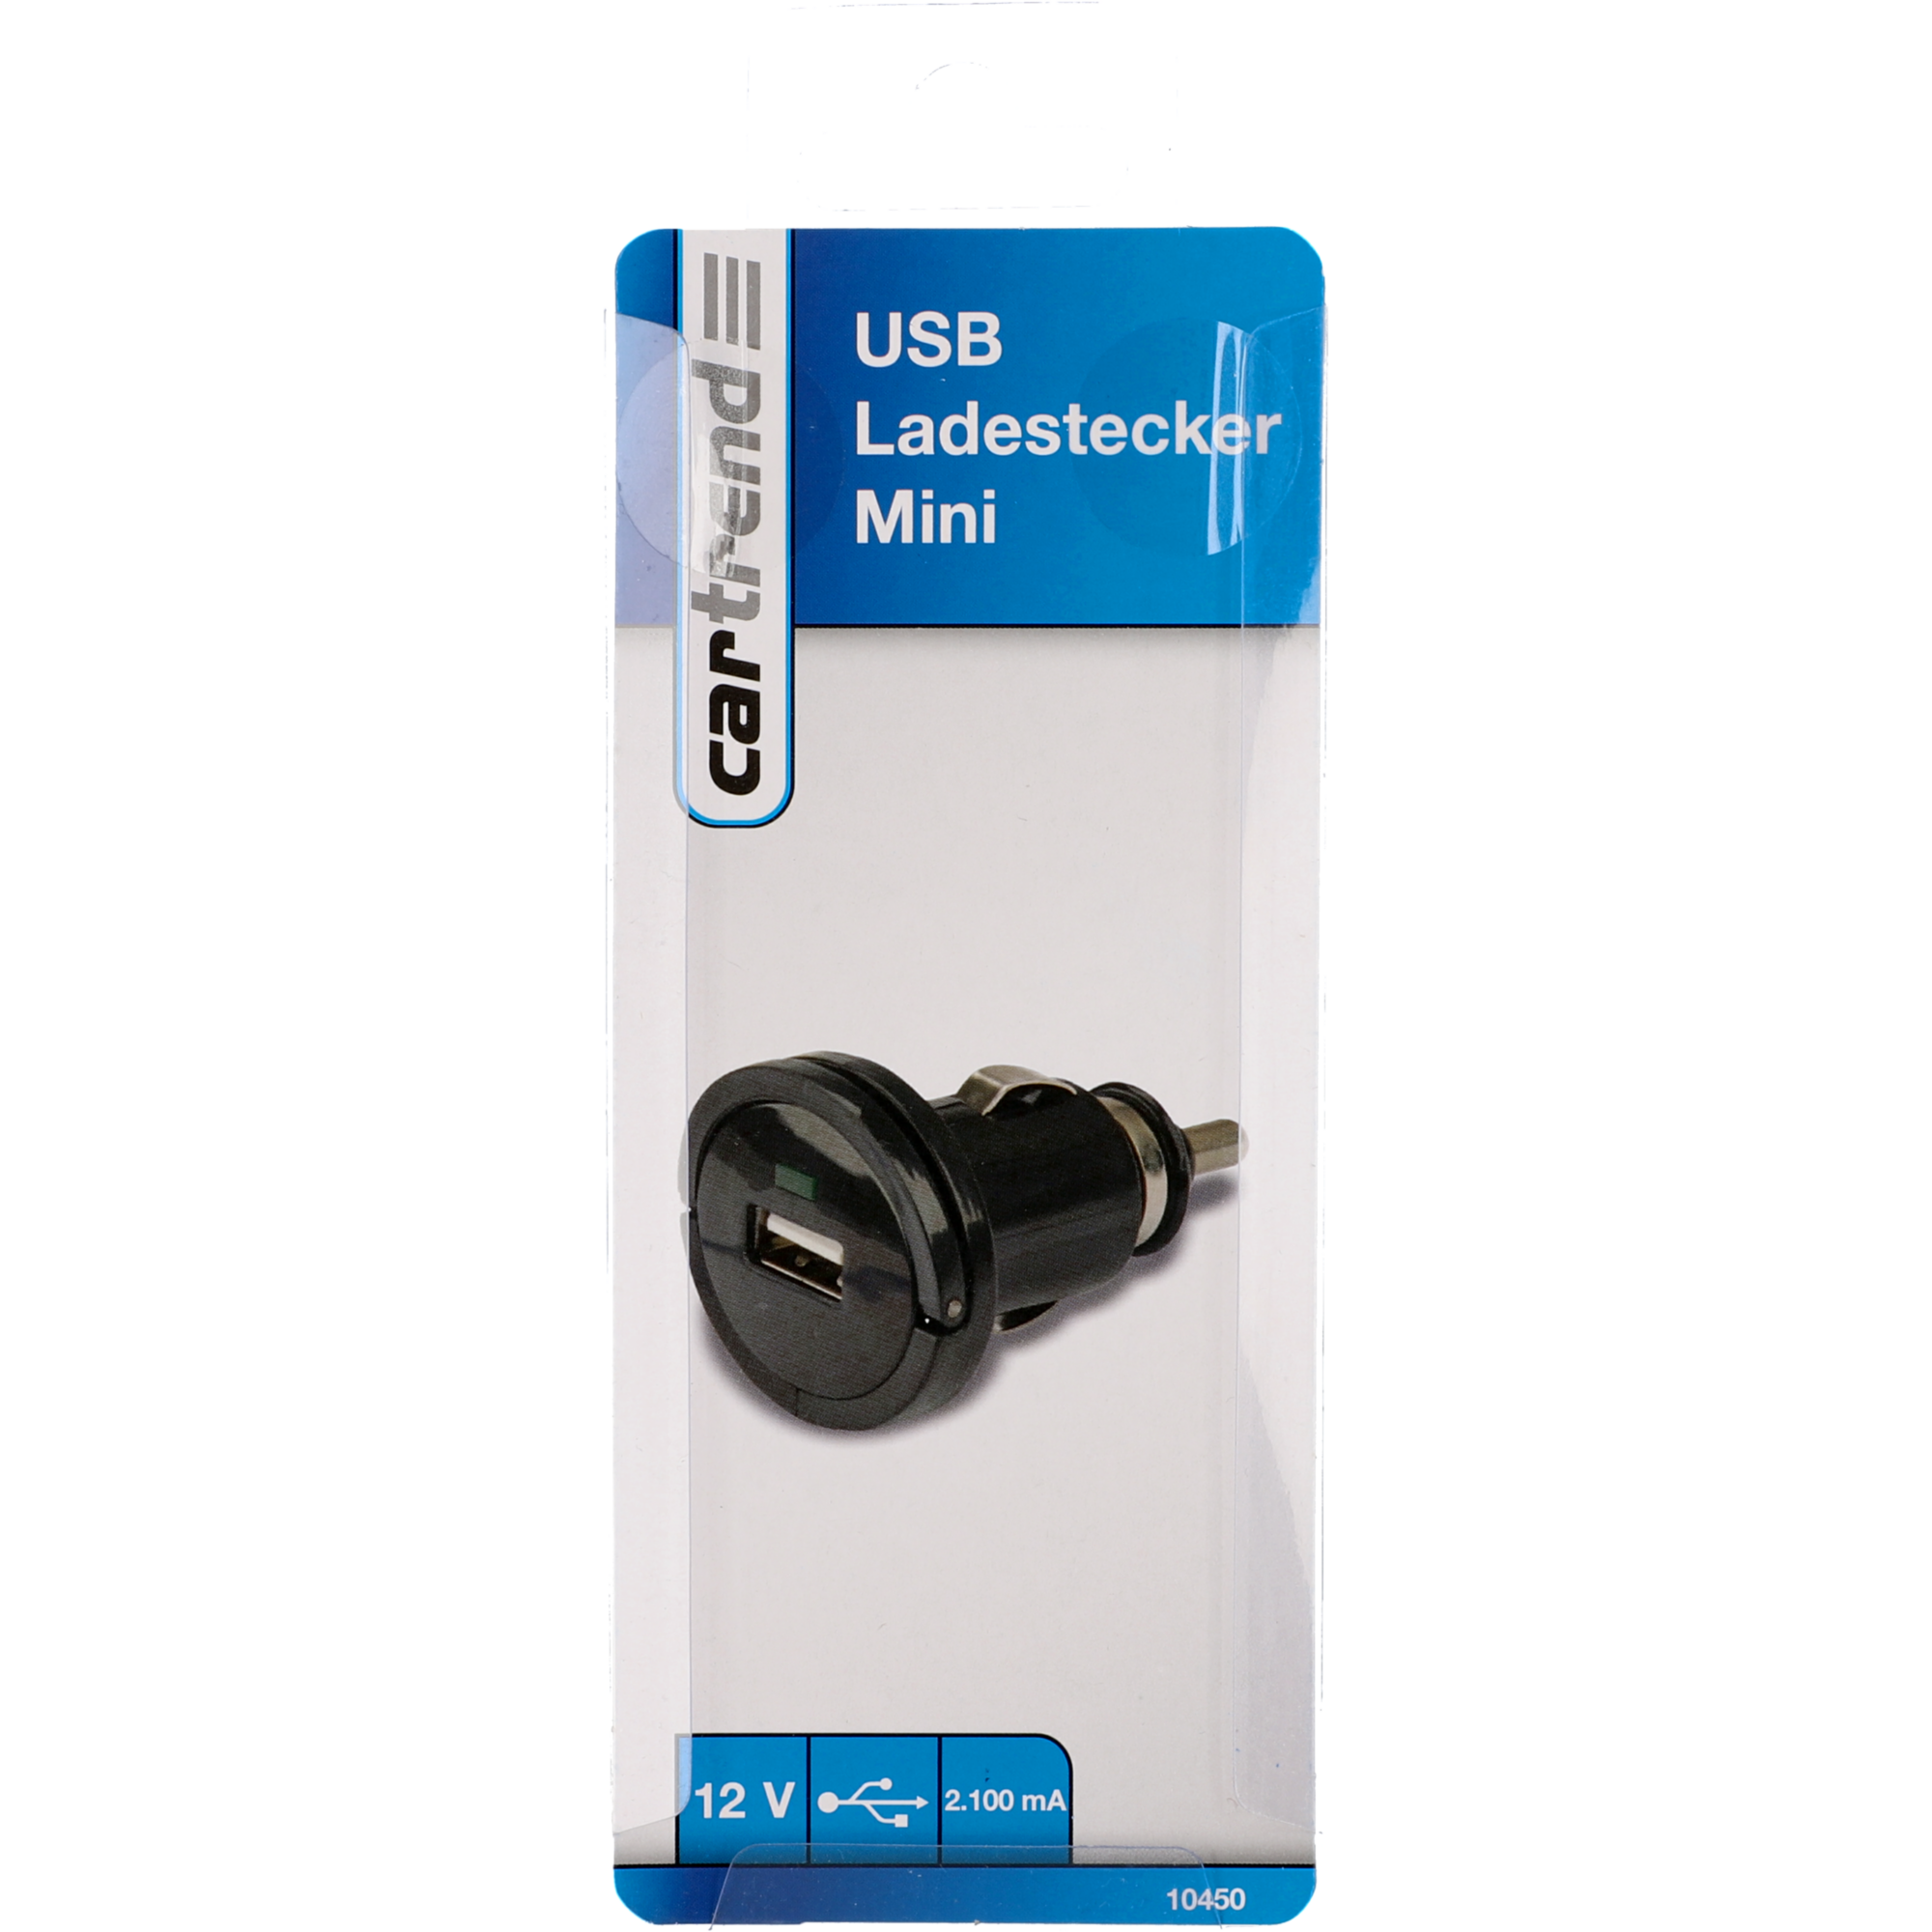 USB-Ladestecker 12 V schwarz + product picture